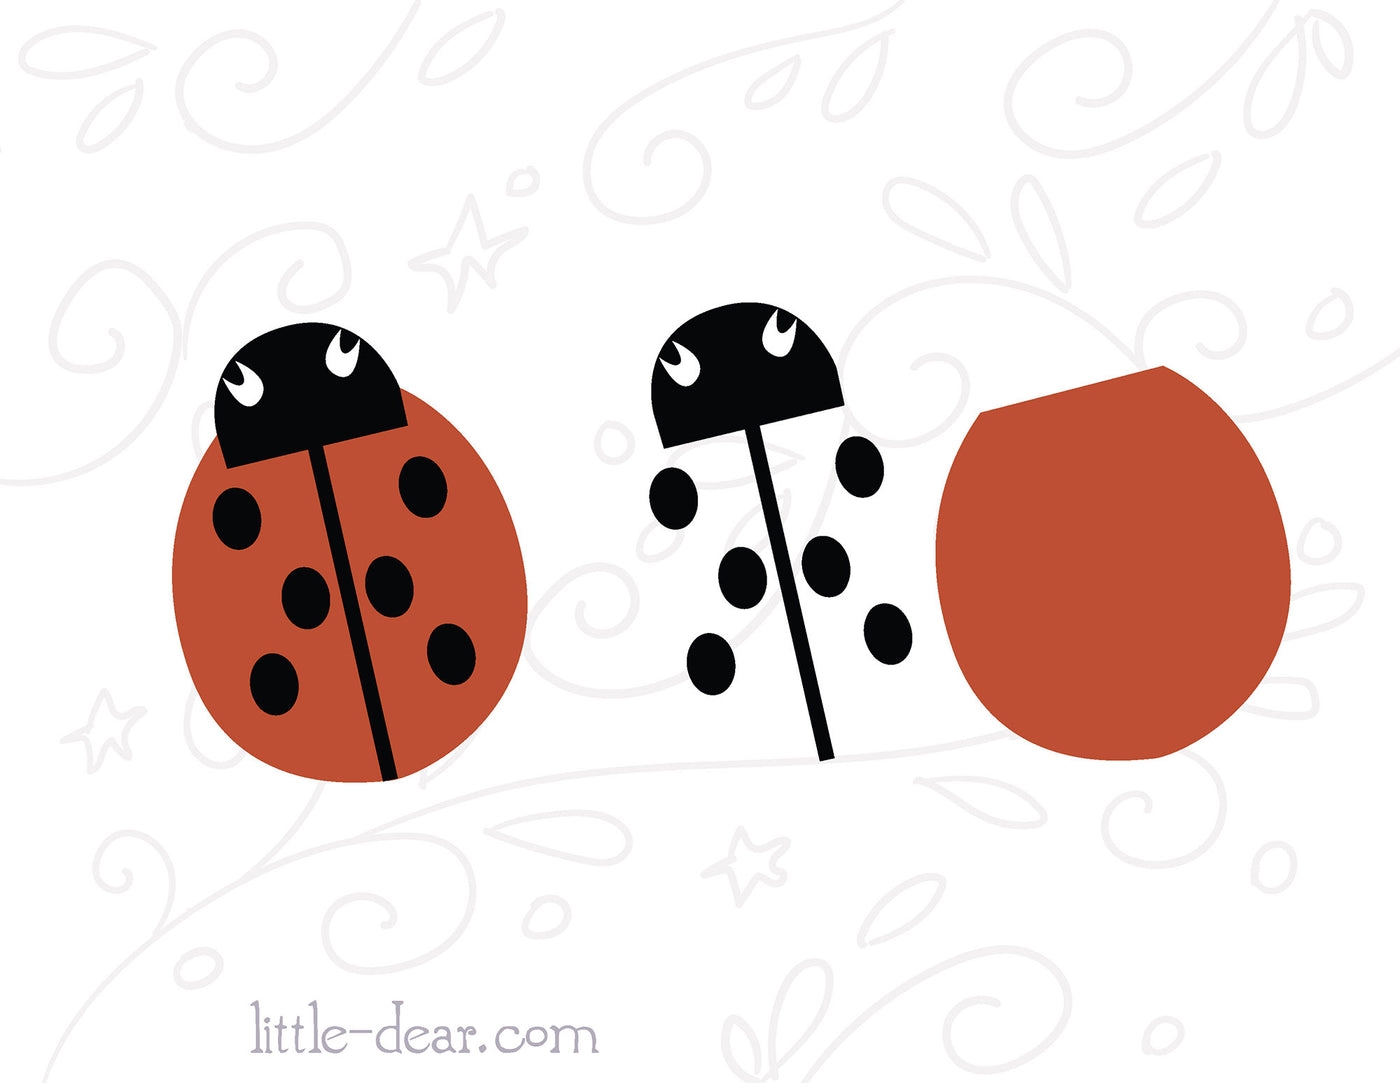 Miraculous Ladybug SVG files for Cricut / Silhouette, Clipart & Cut Files